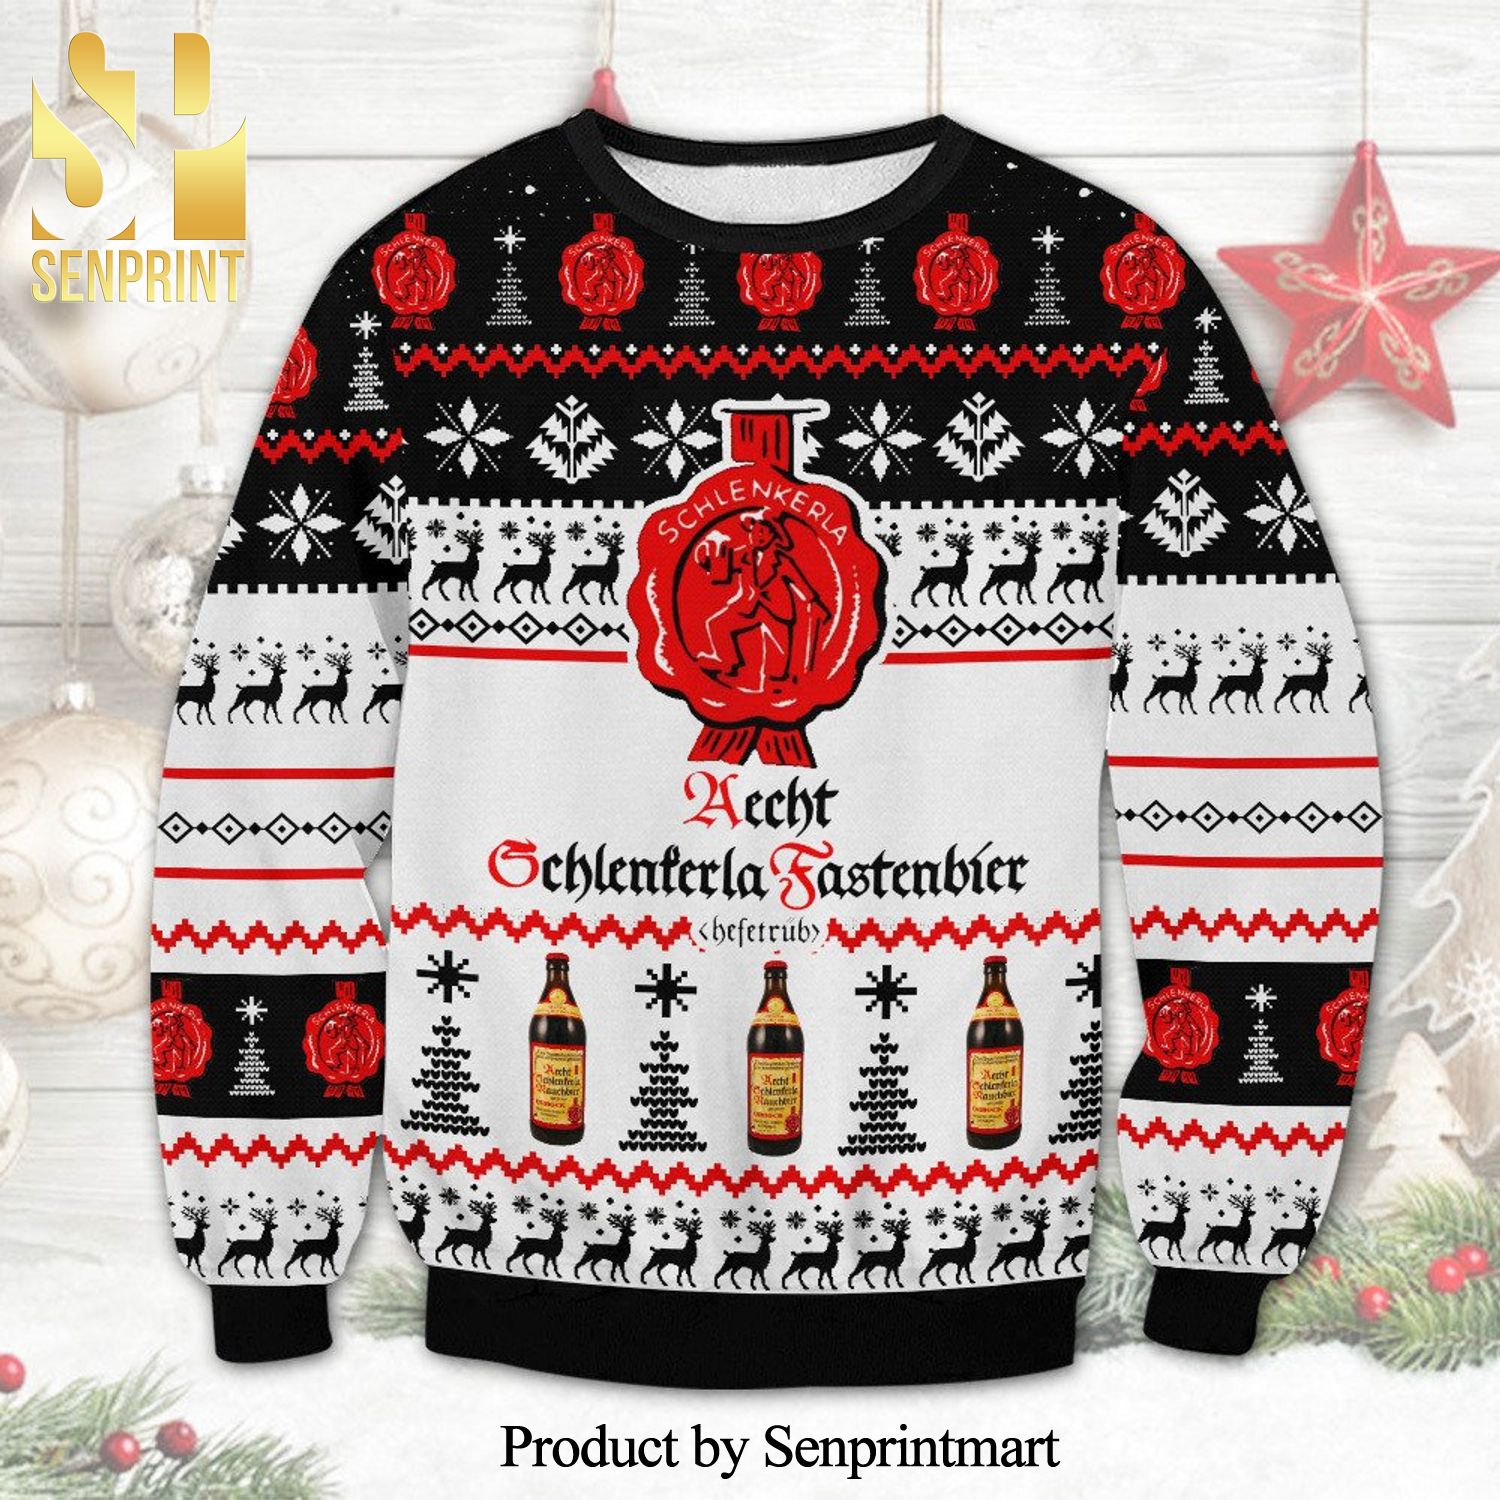 Aecht Schlenkerla Rauchbier Urbock Beer Knitted Ugly Christmas Sweater